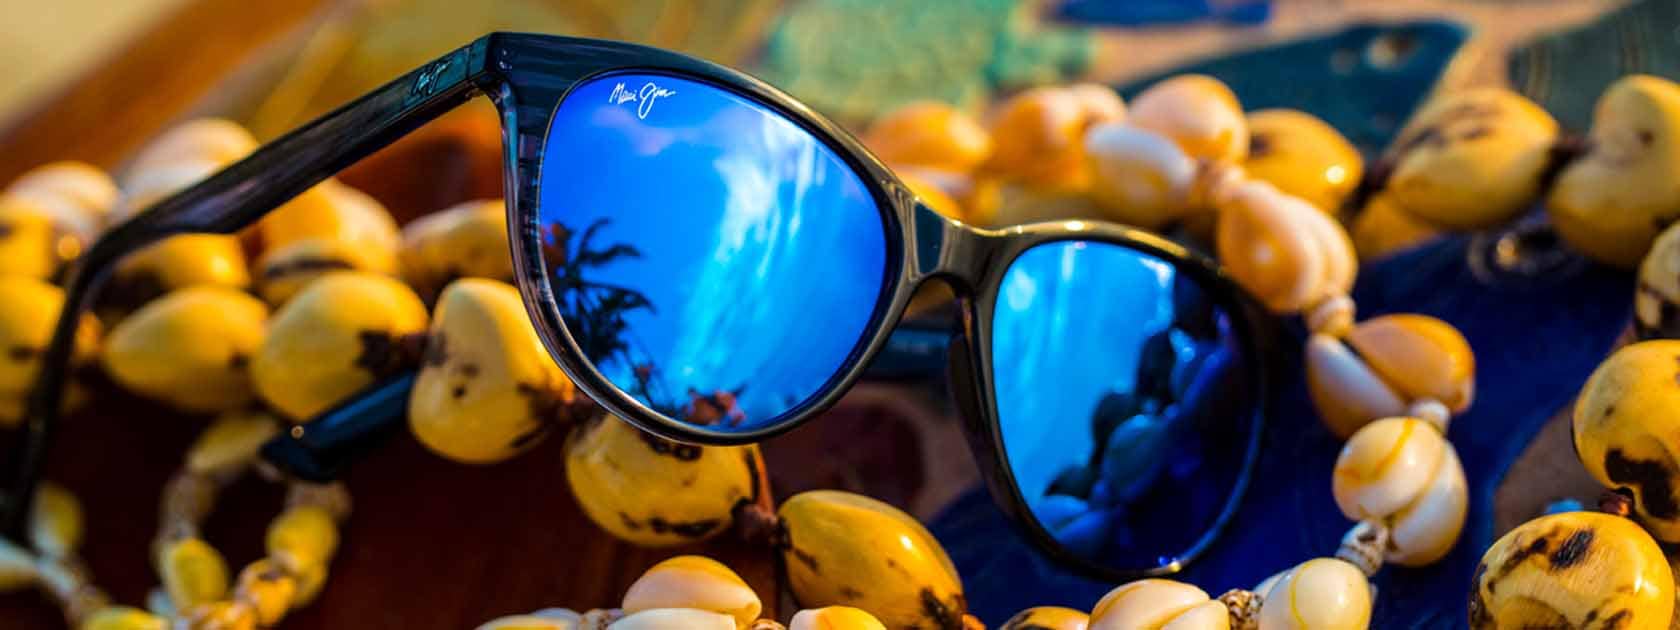 occhiali da sole con lenti blu mostrati sopra a collane di conchiglie